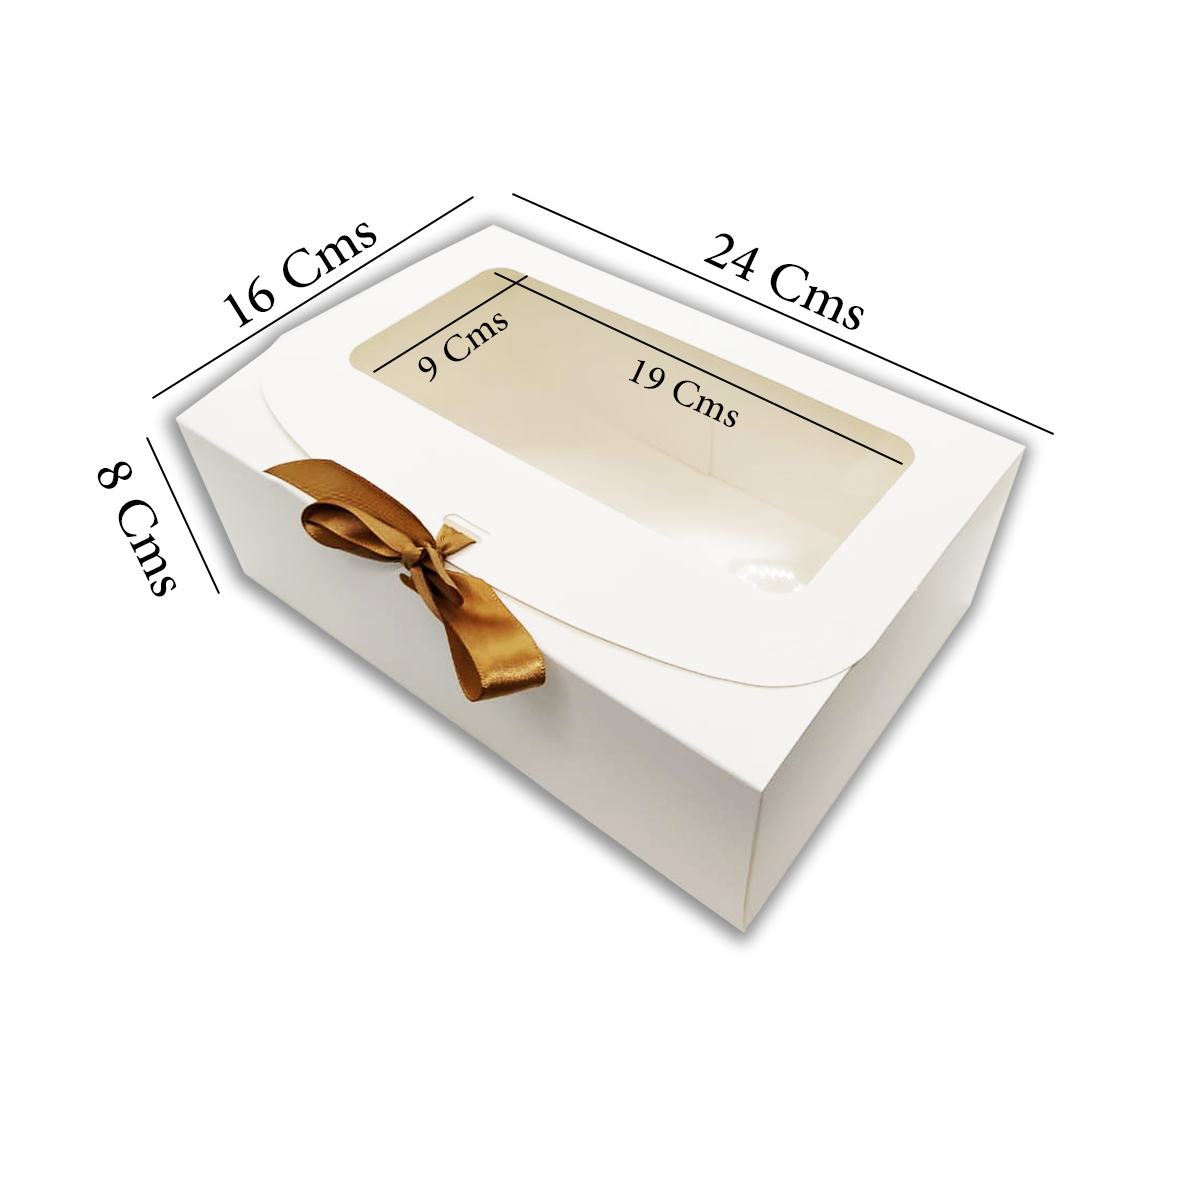 Silk Ribbon Closure Design Window Gift boxes (24x16x8Cms) 10Pc Pack - White